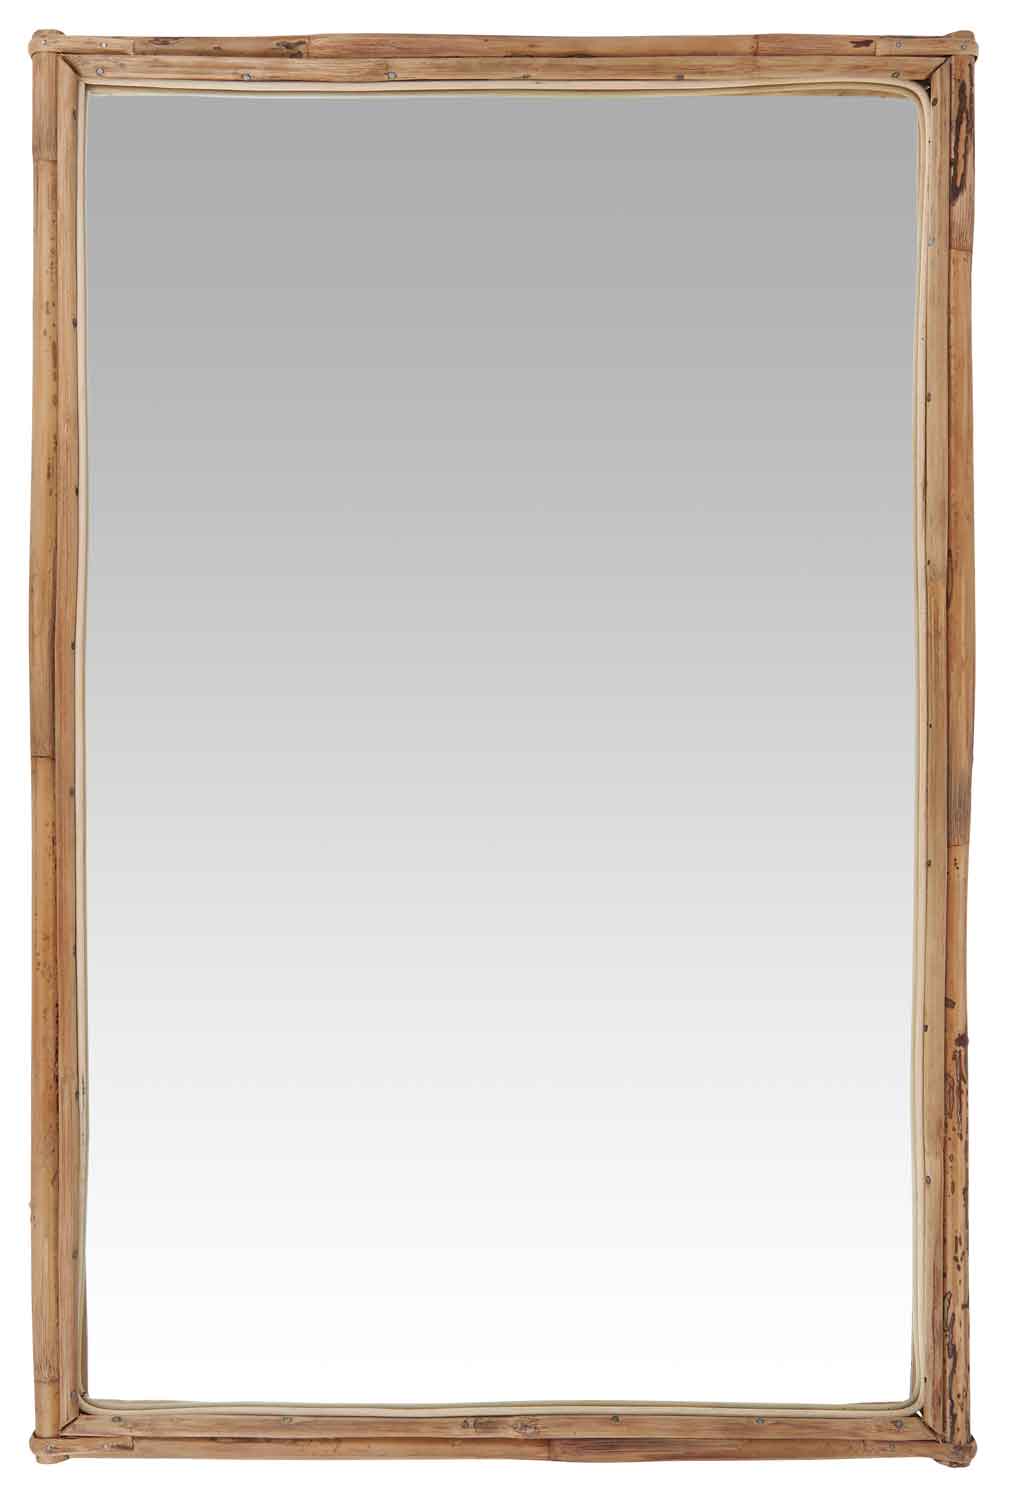 IB LAURSEN vægspejl - glas/natur spejlglas/bambustræ, rektangulær (75,5x49,5) (inaktiv - 2 pr. kolli